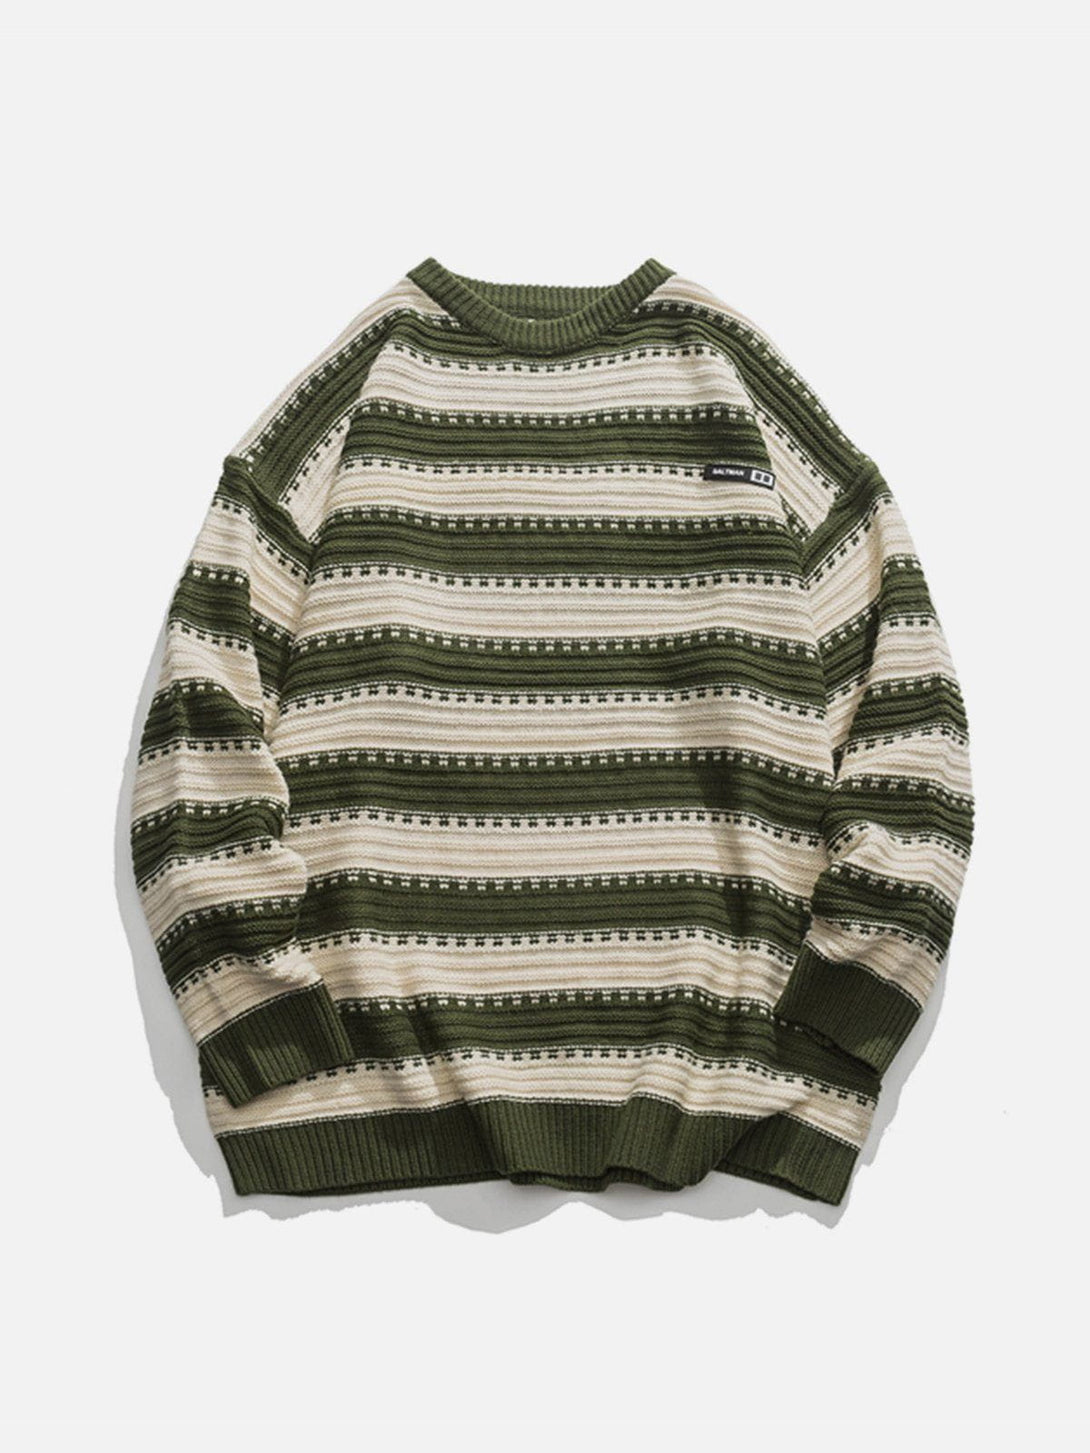 Majesda® - Crewneck Striped Sweater outfit ideas streetwear fashion